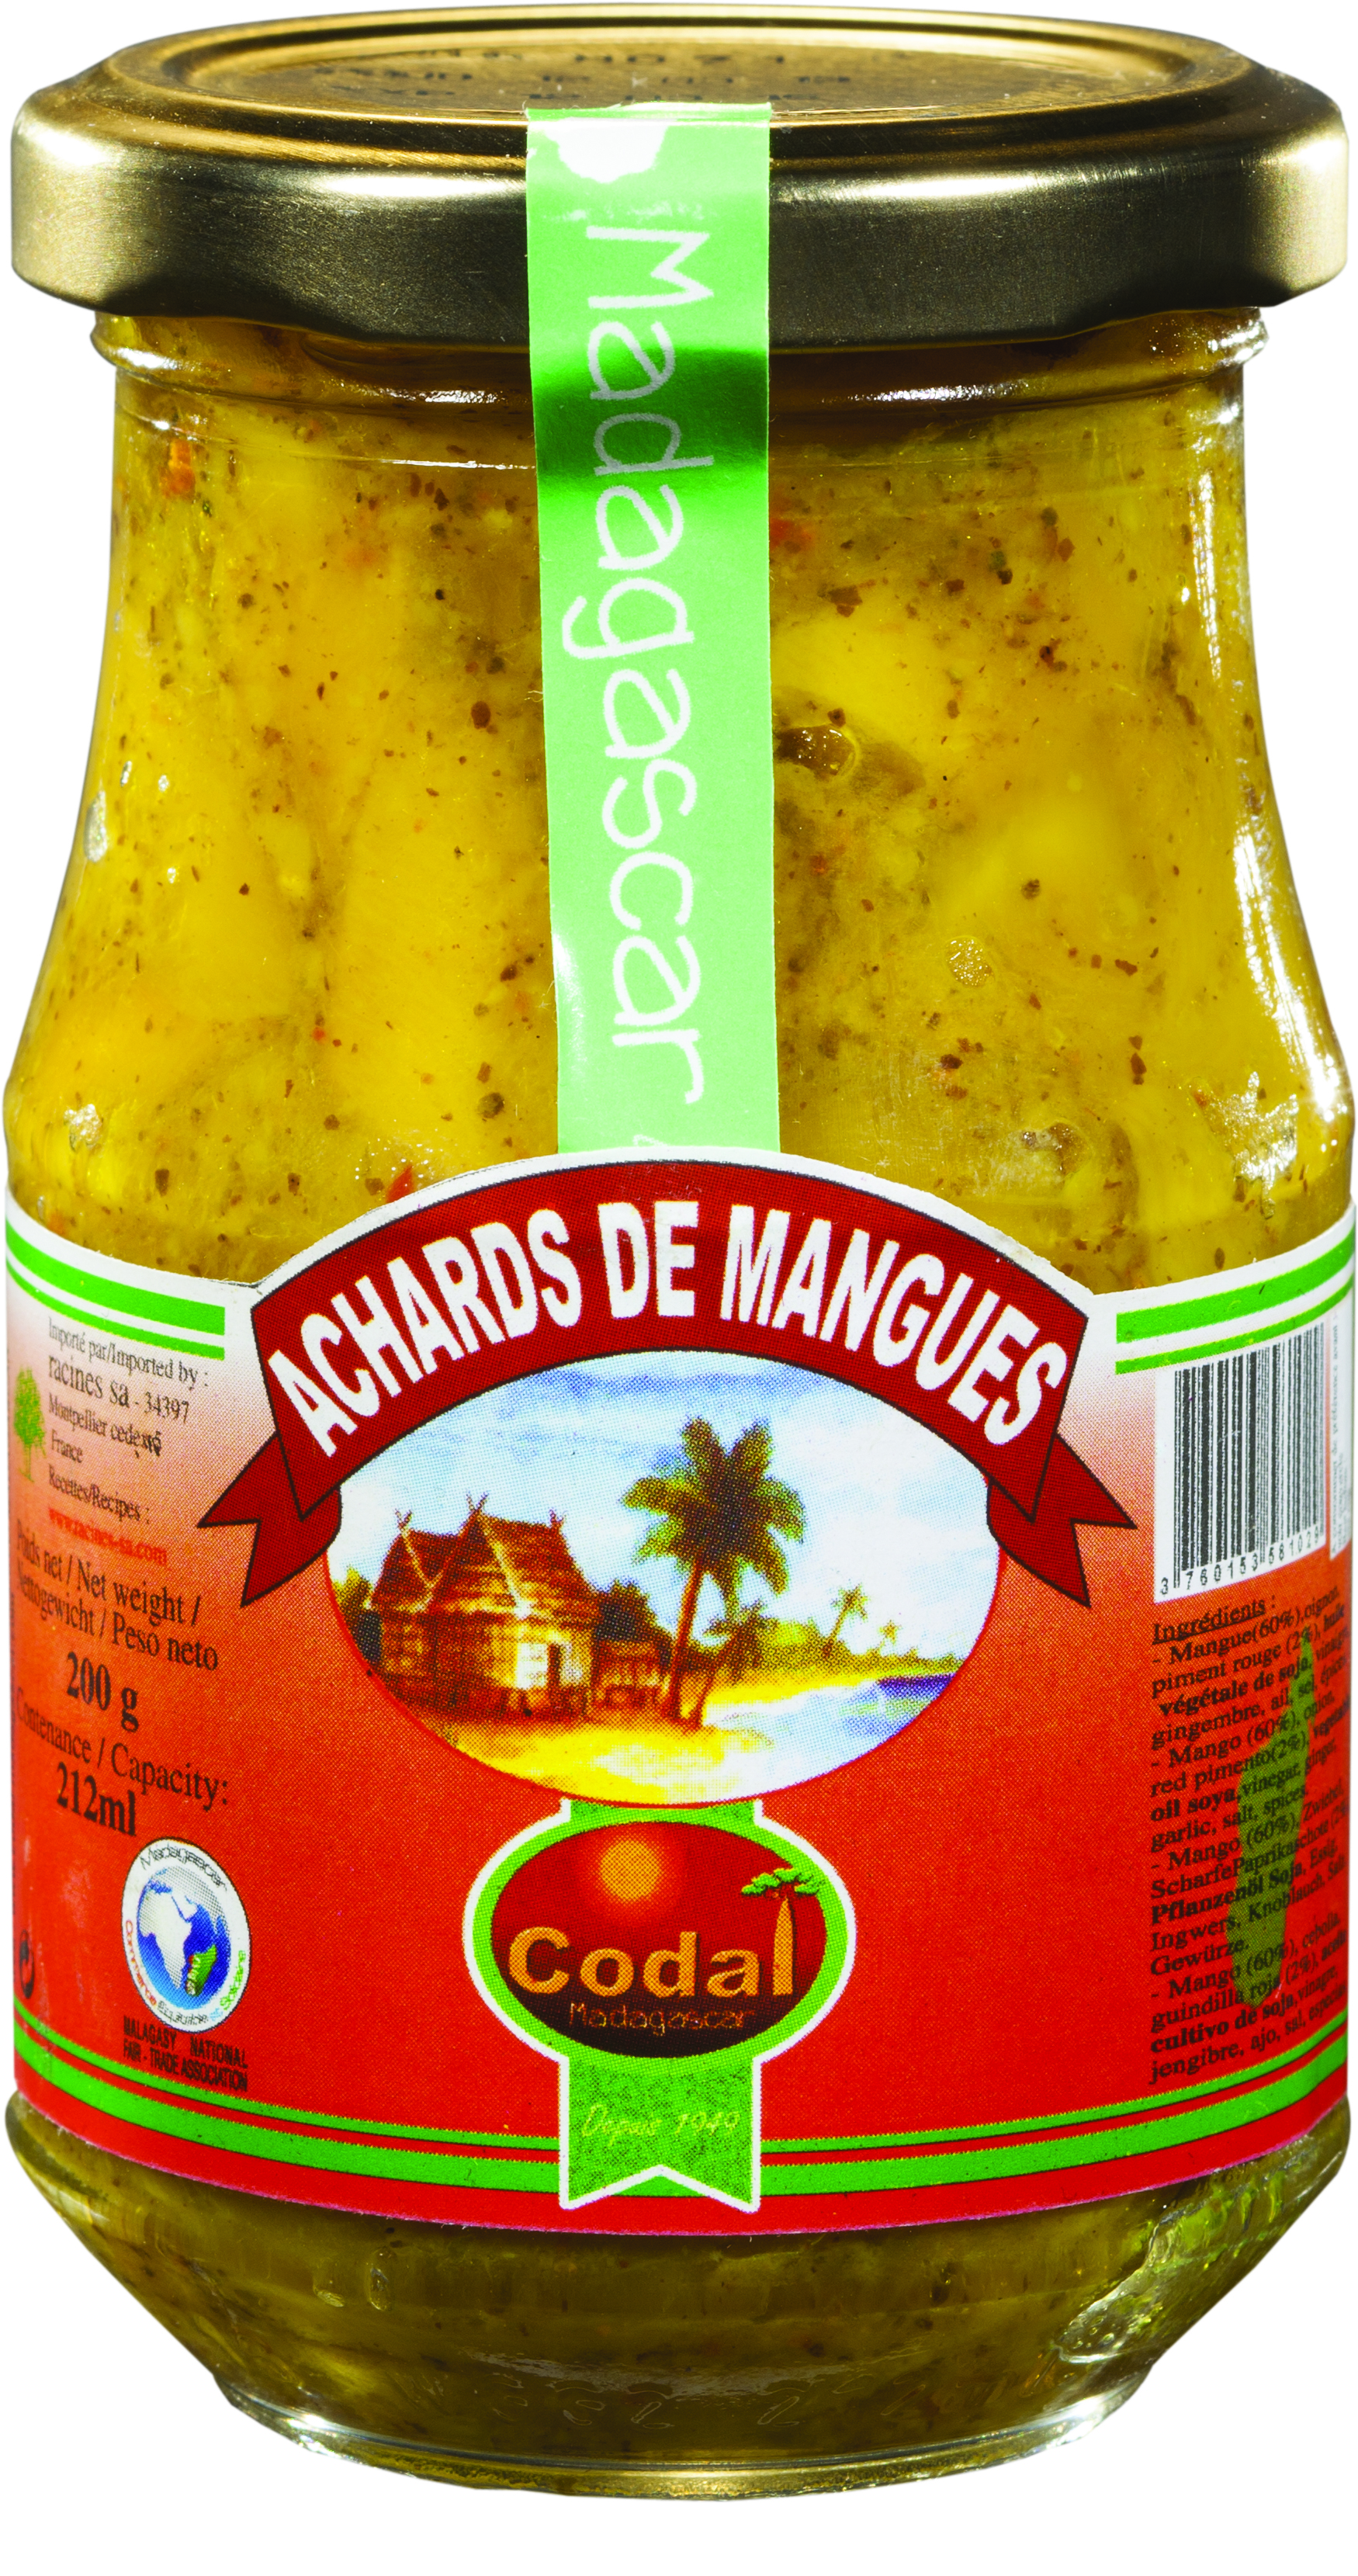 Achards De Mangues (12 X 200 G) - Codal